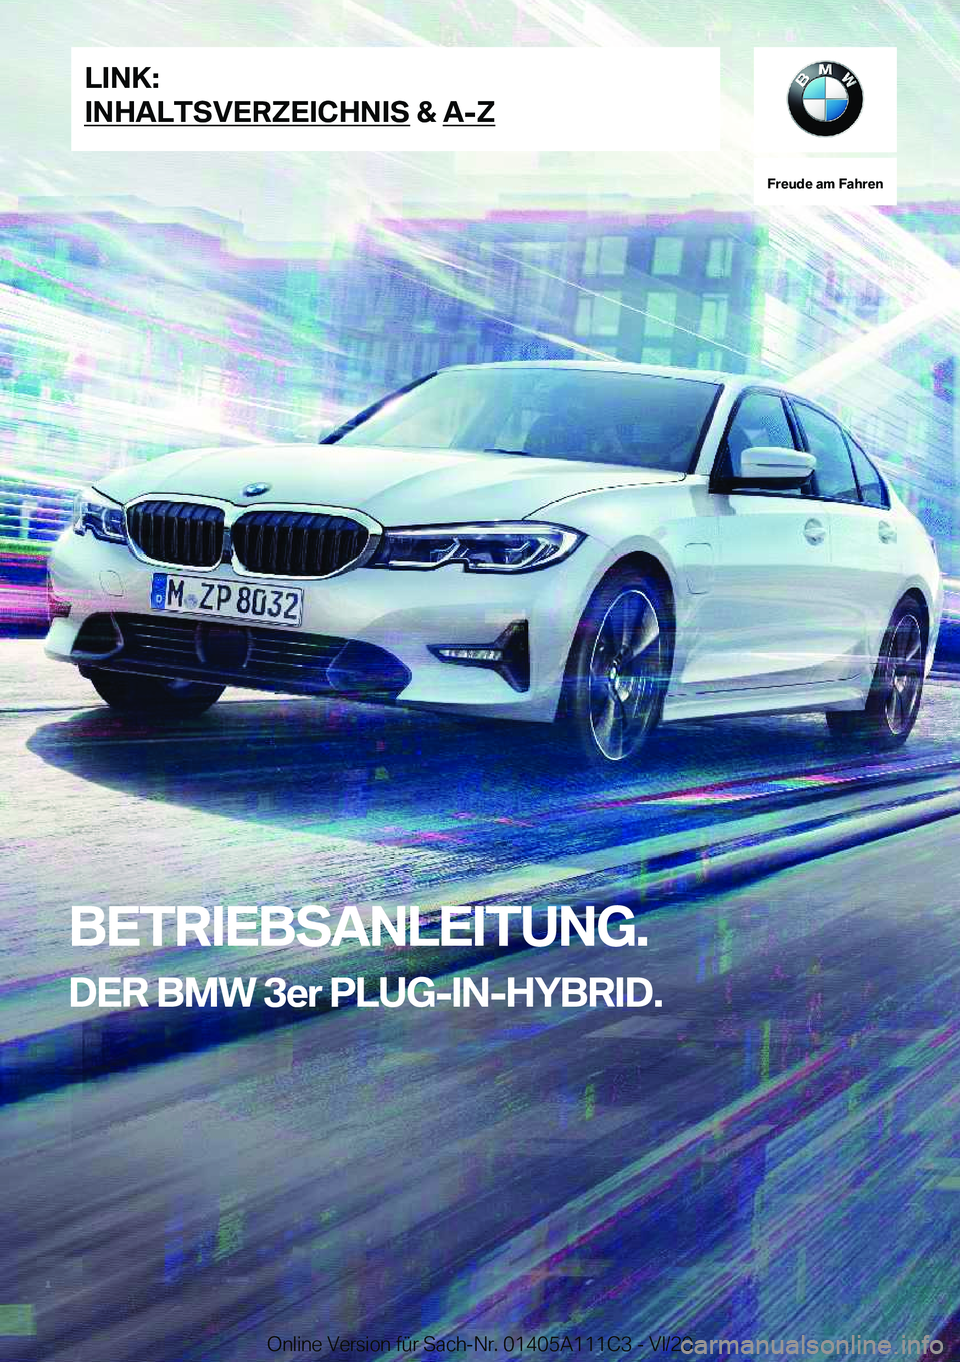 BMW 3 SERIES SEDAN PLUG-IN HYBRID 2021  Betriebsanleitungen (in German) �F�r�e�u�d�e��a�m��F�a�h�r�e�n
�B�E�T�R�I�E�B�S�A�N�L�E�I�T�U�N�G�.�D�E�R��B�M�W��3�e�r��P�L�U�G�-�I�N�-�H�Y�B�R�I�D�.�L�I�N�K�:
�I�N�H�A�L�T�S�V�E�R�Z�E�I�C�H�N�I�S��&��A�-�Z�O�n�l�i�n�e��V�e